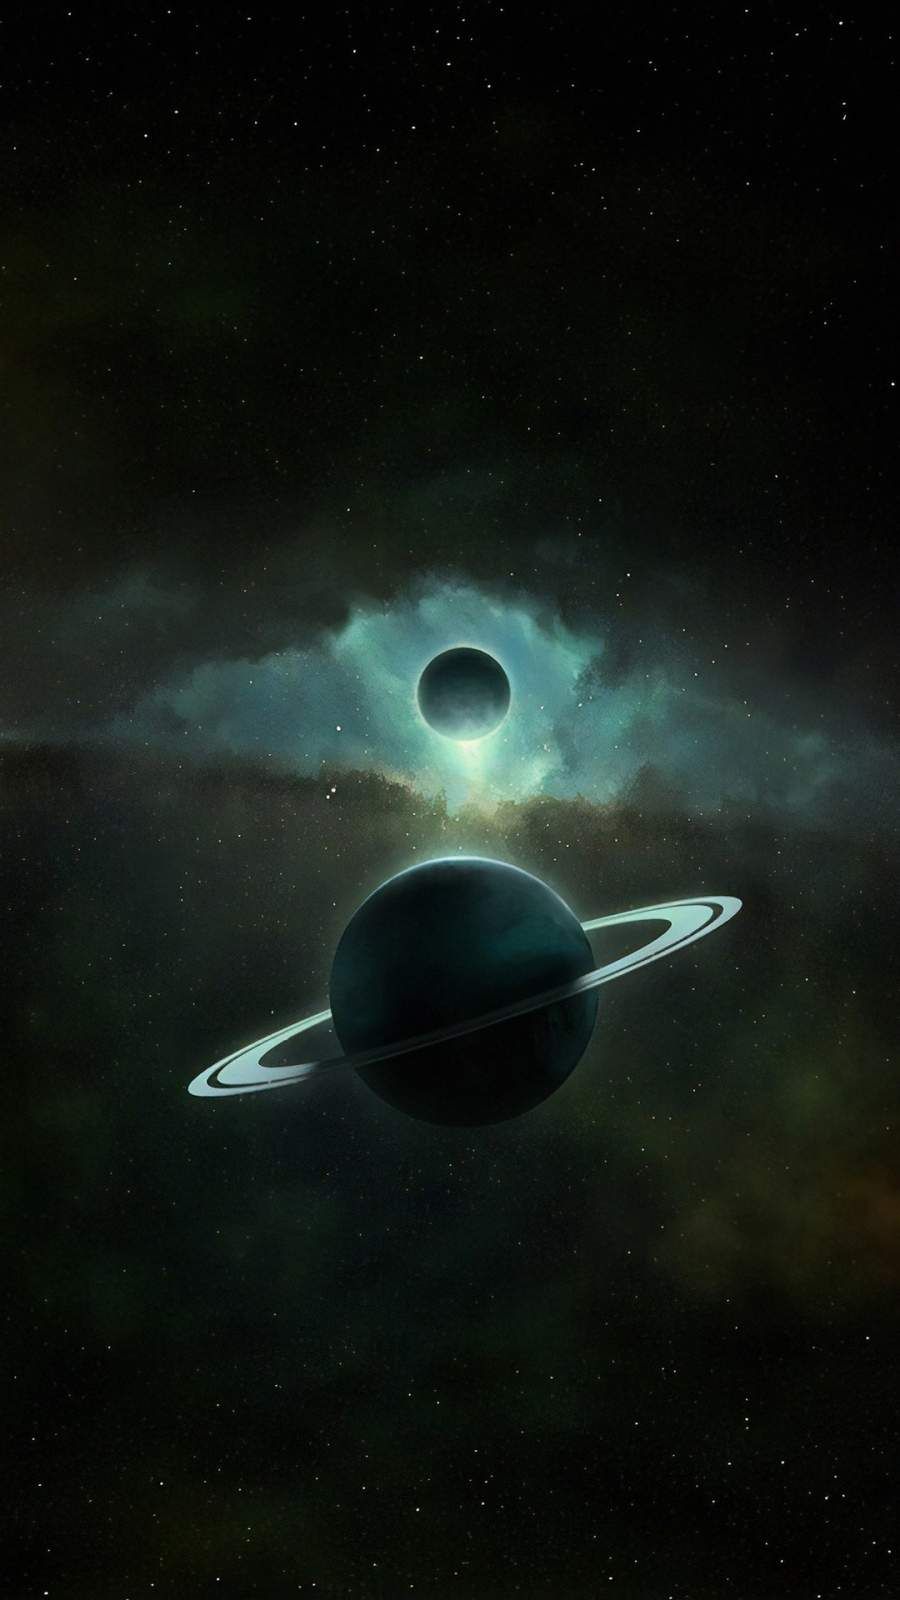 Saturn Planet Art 4K iPhone 11 Pro Max Wallpaper